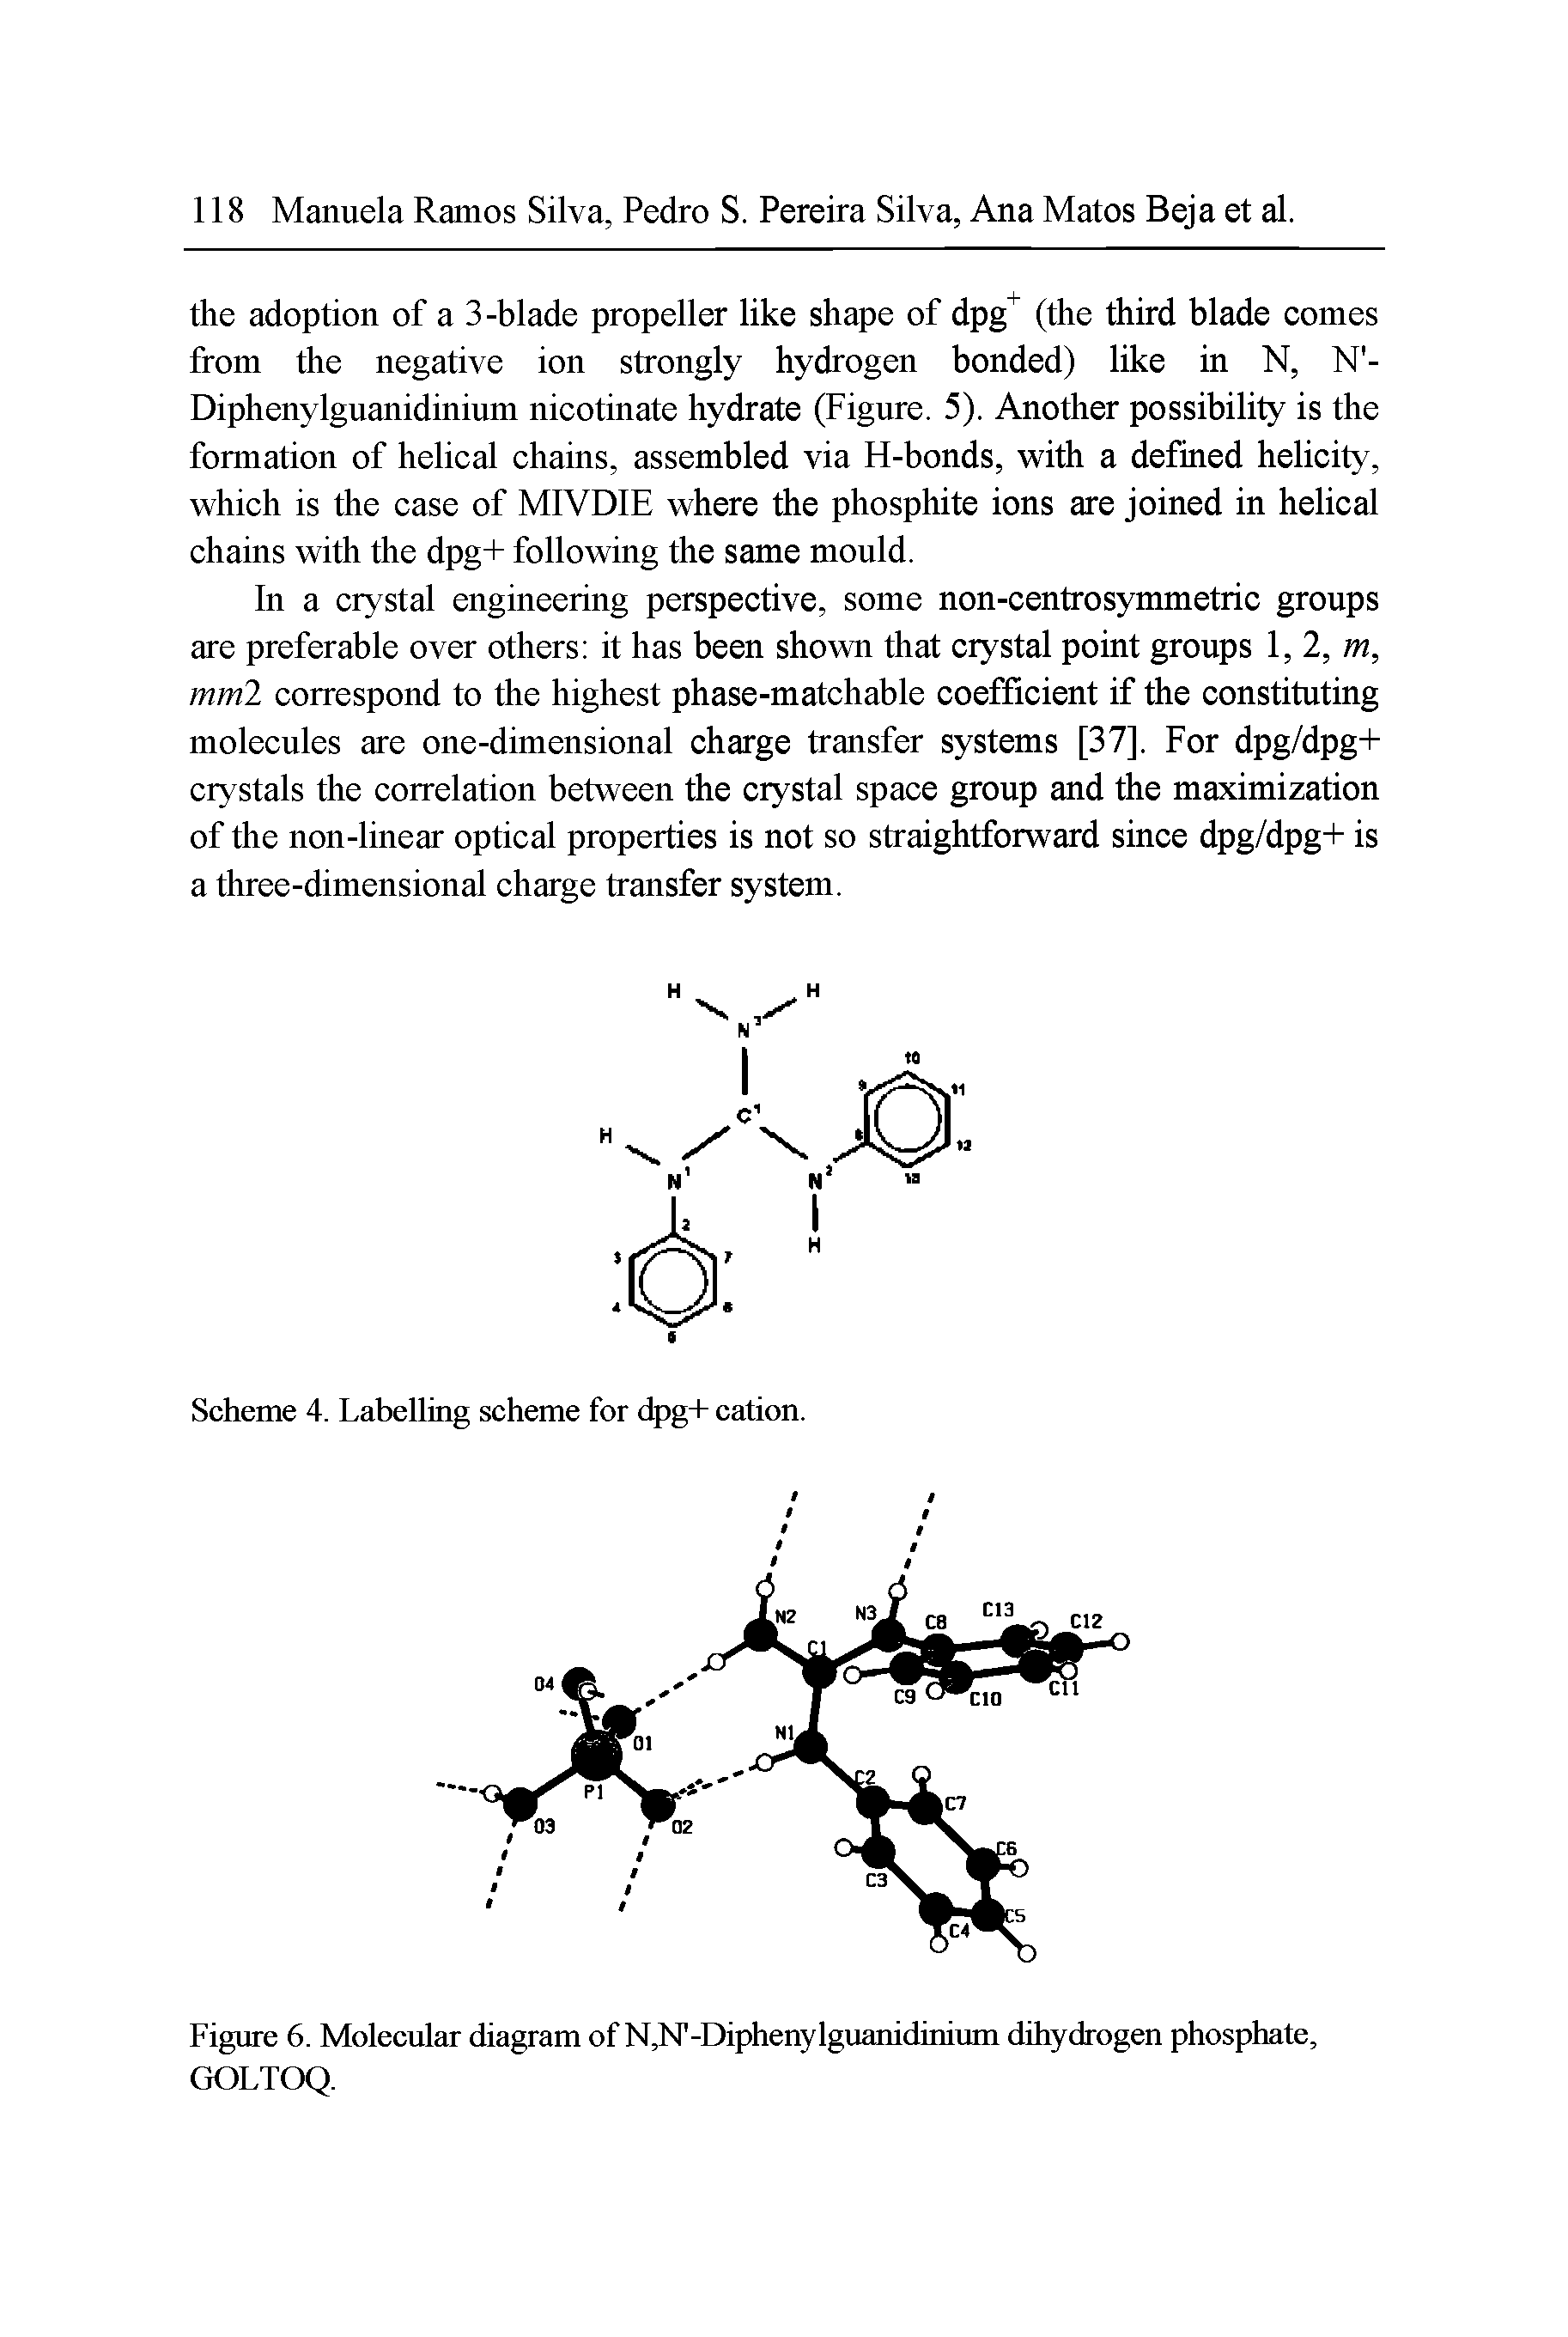 Figure 6. Molecular diagram of N,lSr-Diphenylguanidinium dihydrogen phosphate, GOLTOQ.